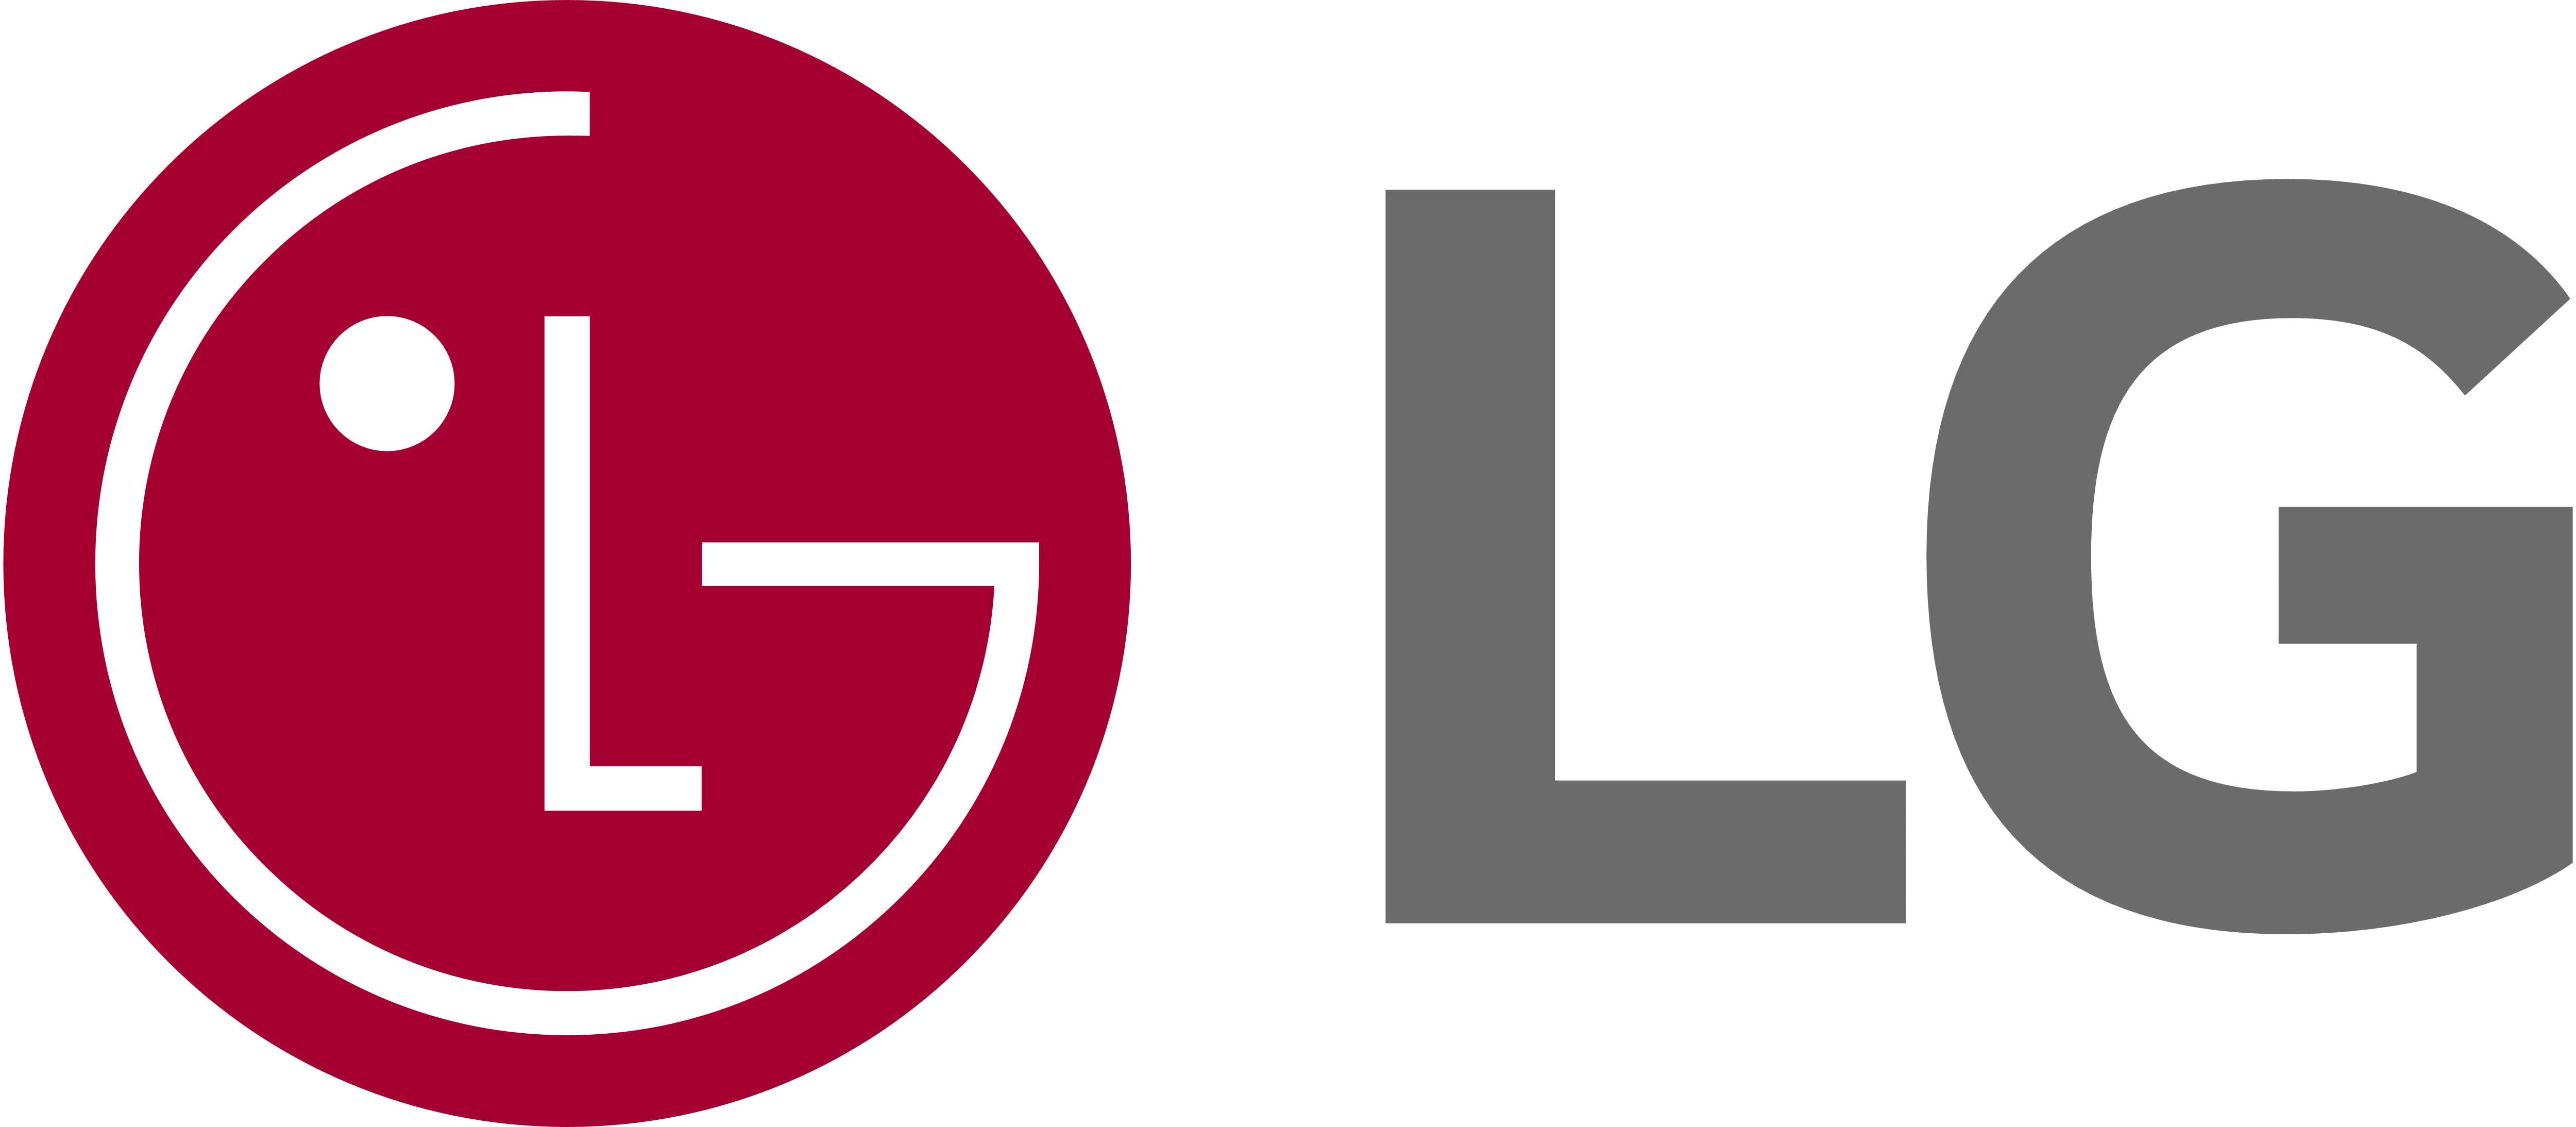 LG Fridge Appliance Repair, Maytag Refrigerator Repair